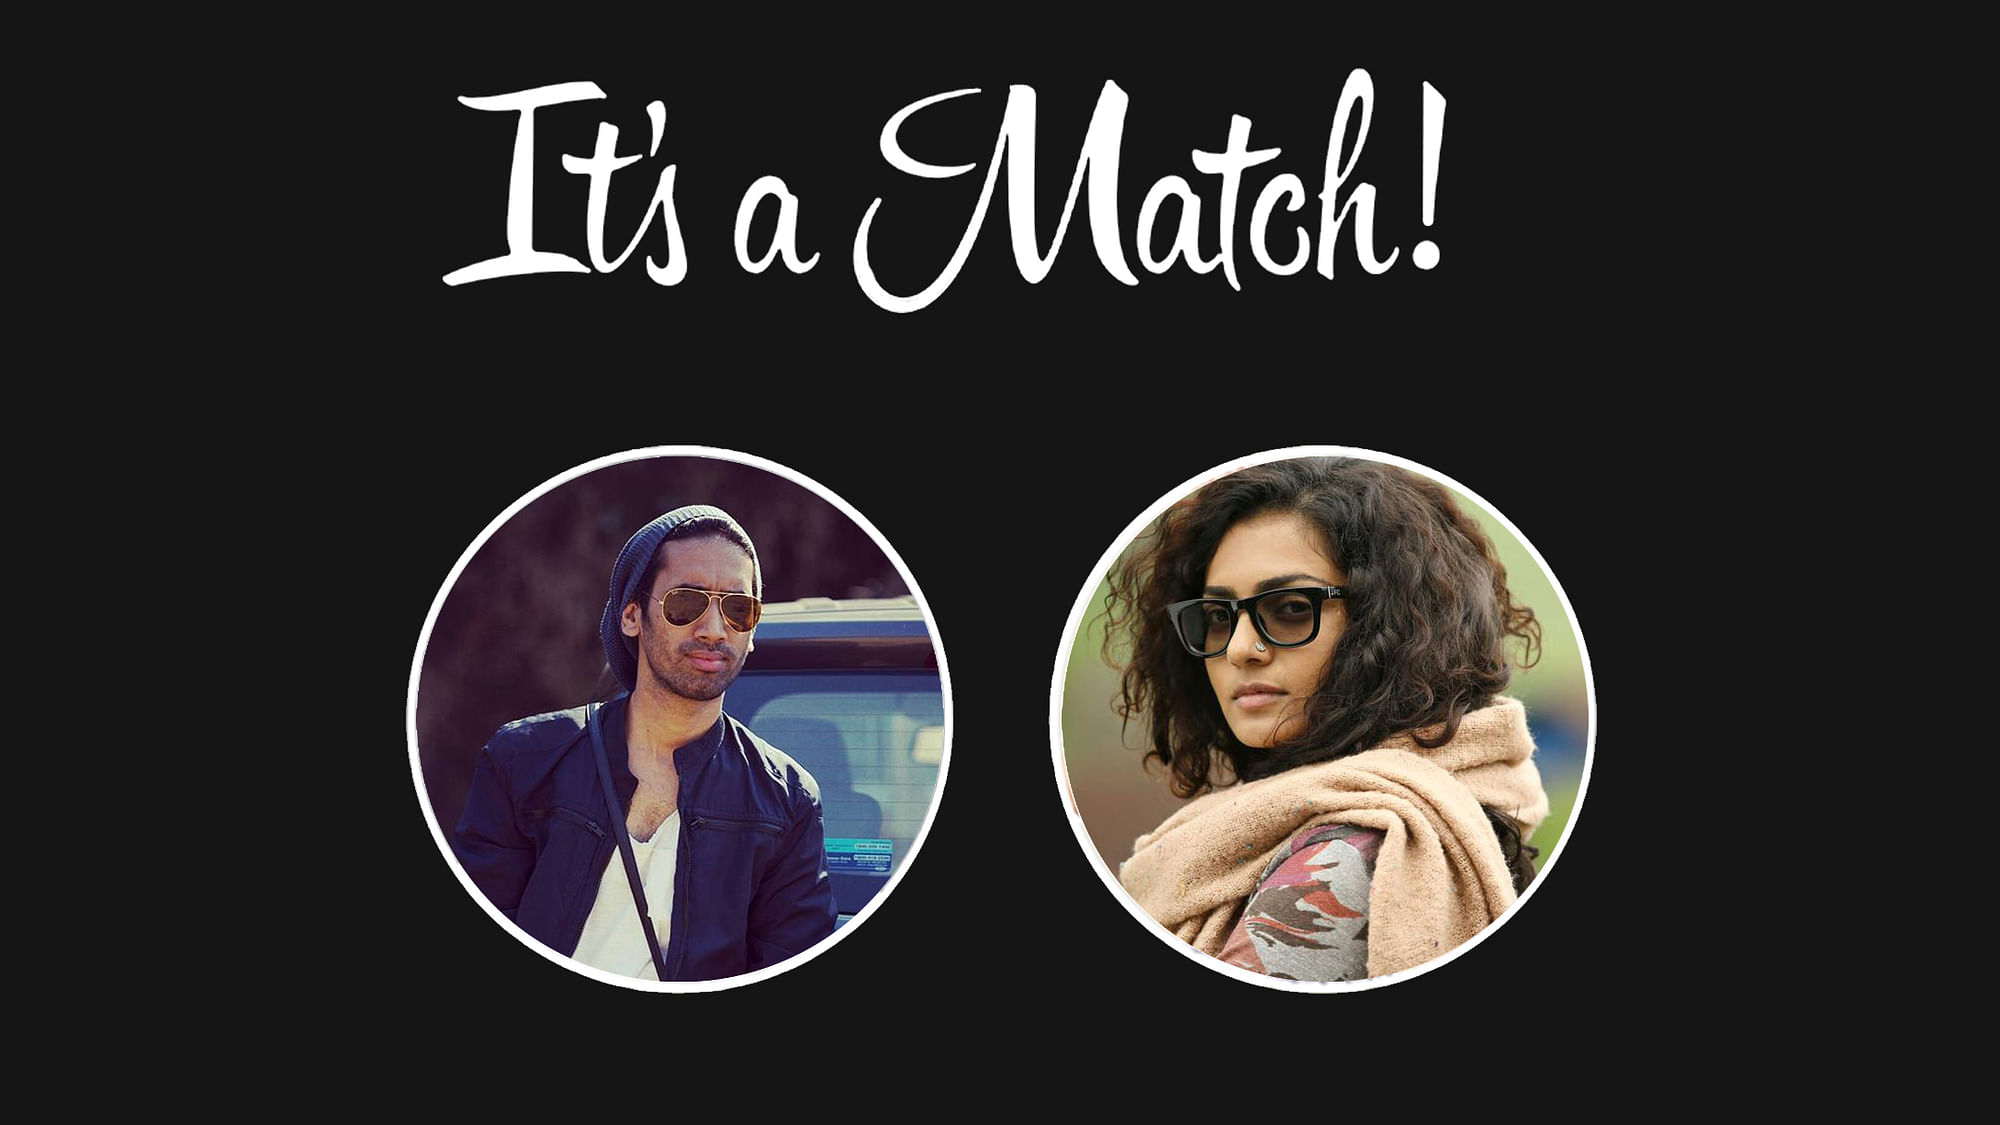 It’s a match... what next?